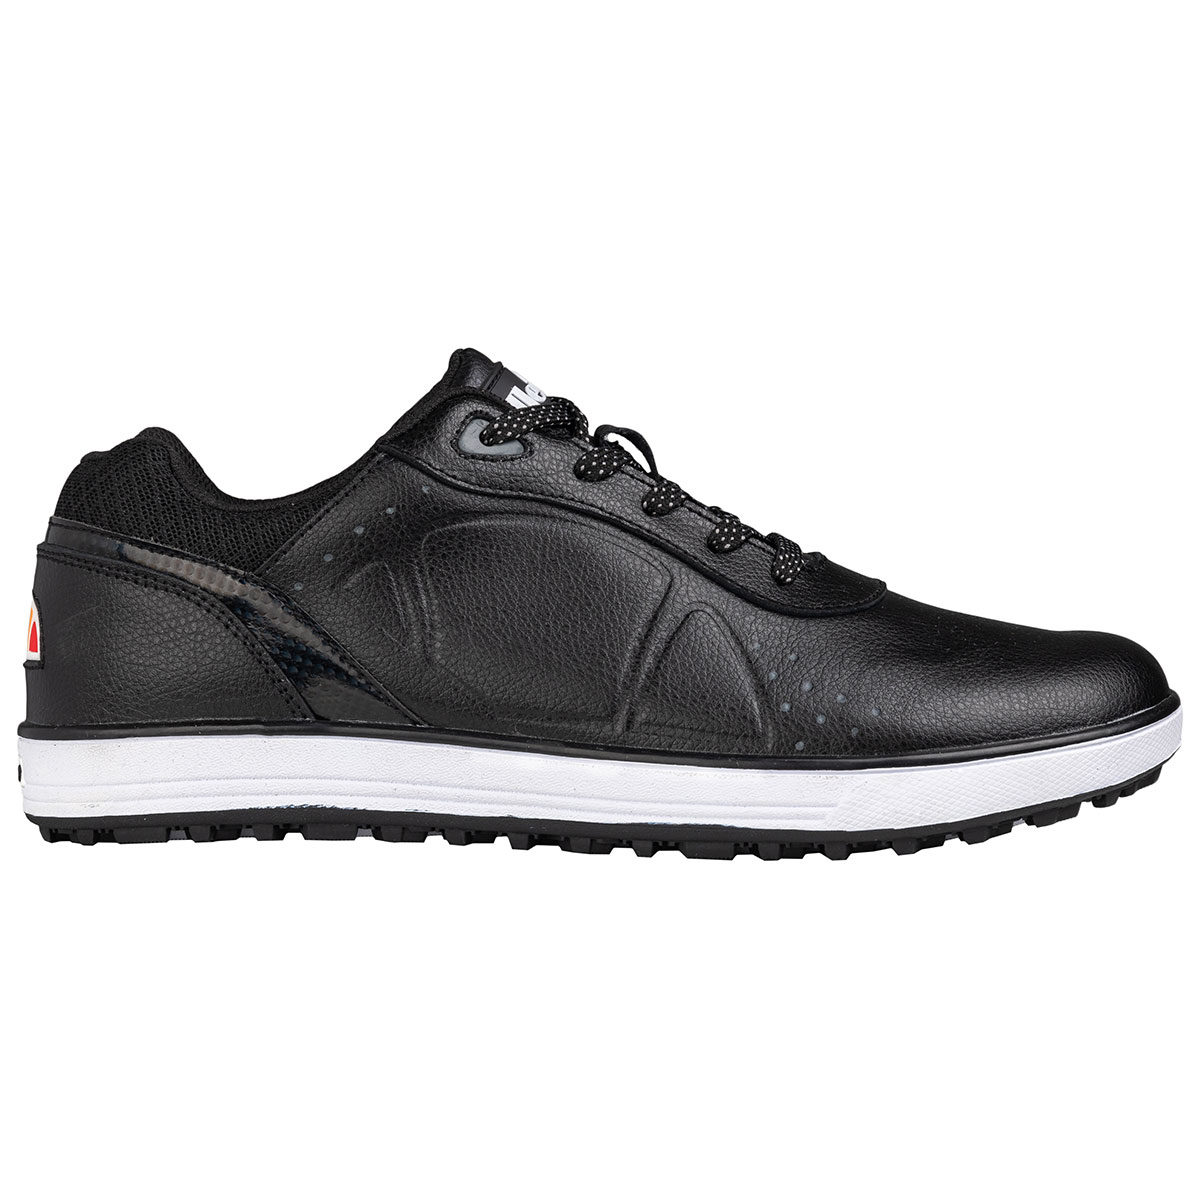 Ellesse Men’s Shore Spikeless Golf Shoes - Black